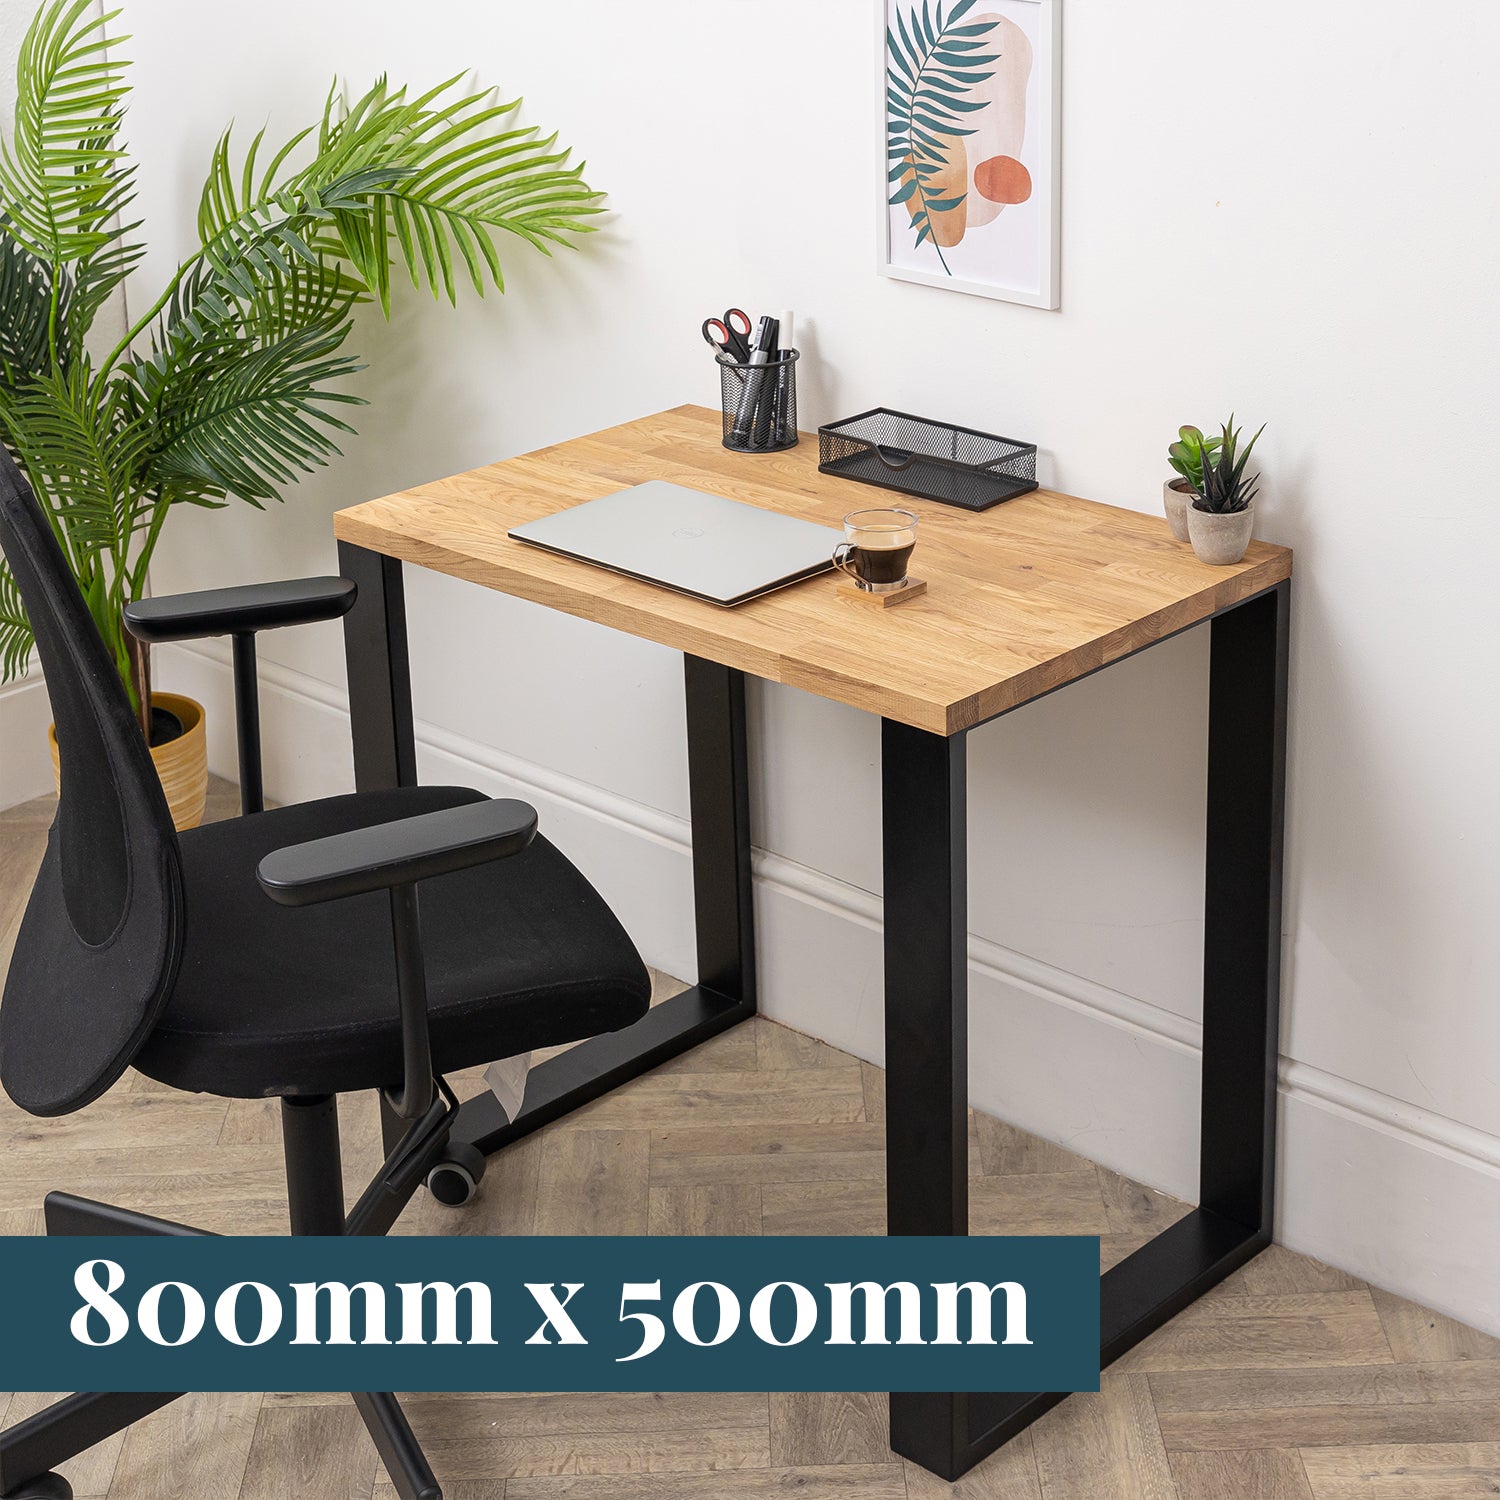 Oak Solid Wood Desk with Square Metal Legs - 27mm thick desktop #length_800mm depth_500mm